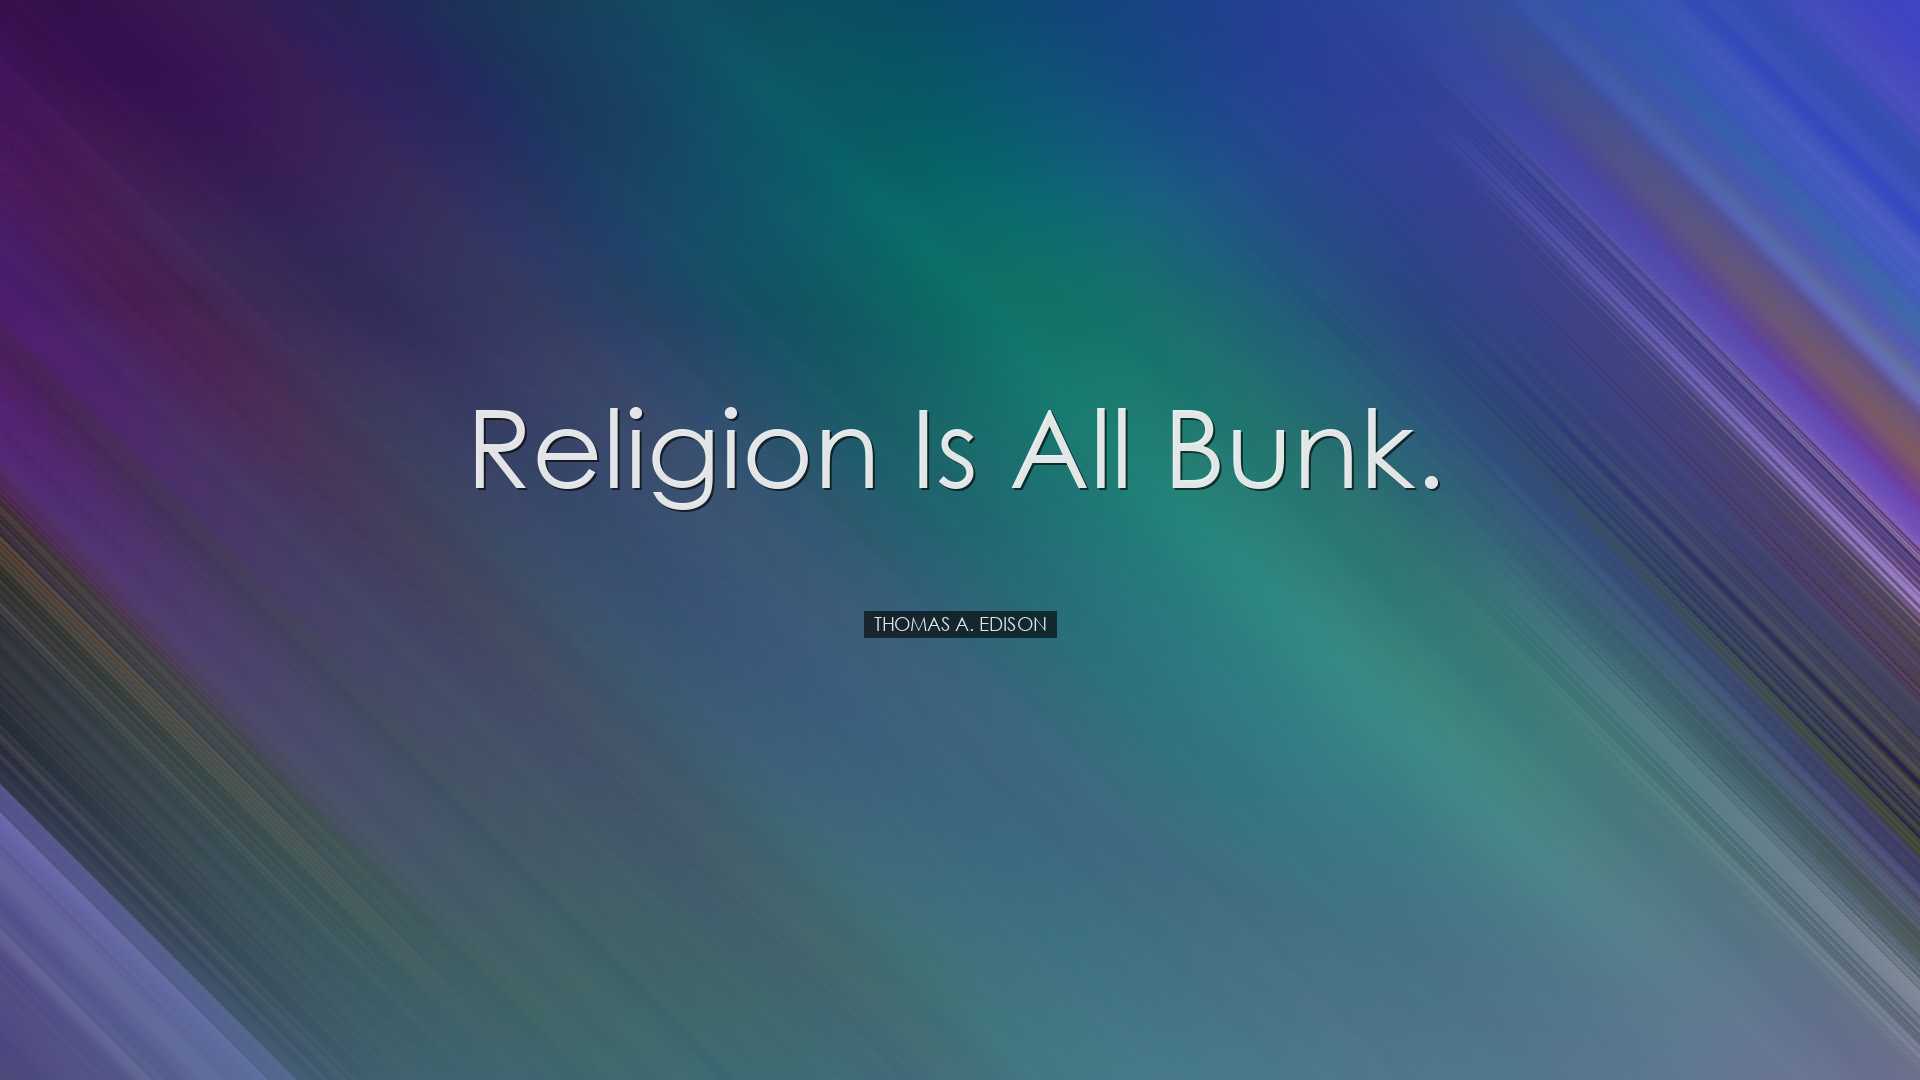 Religion is all bunk. - Thomas A. Edison